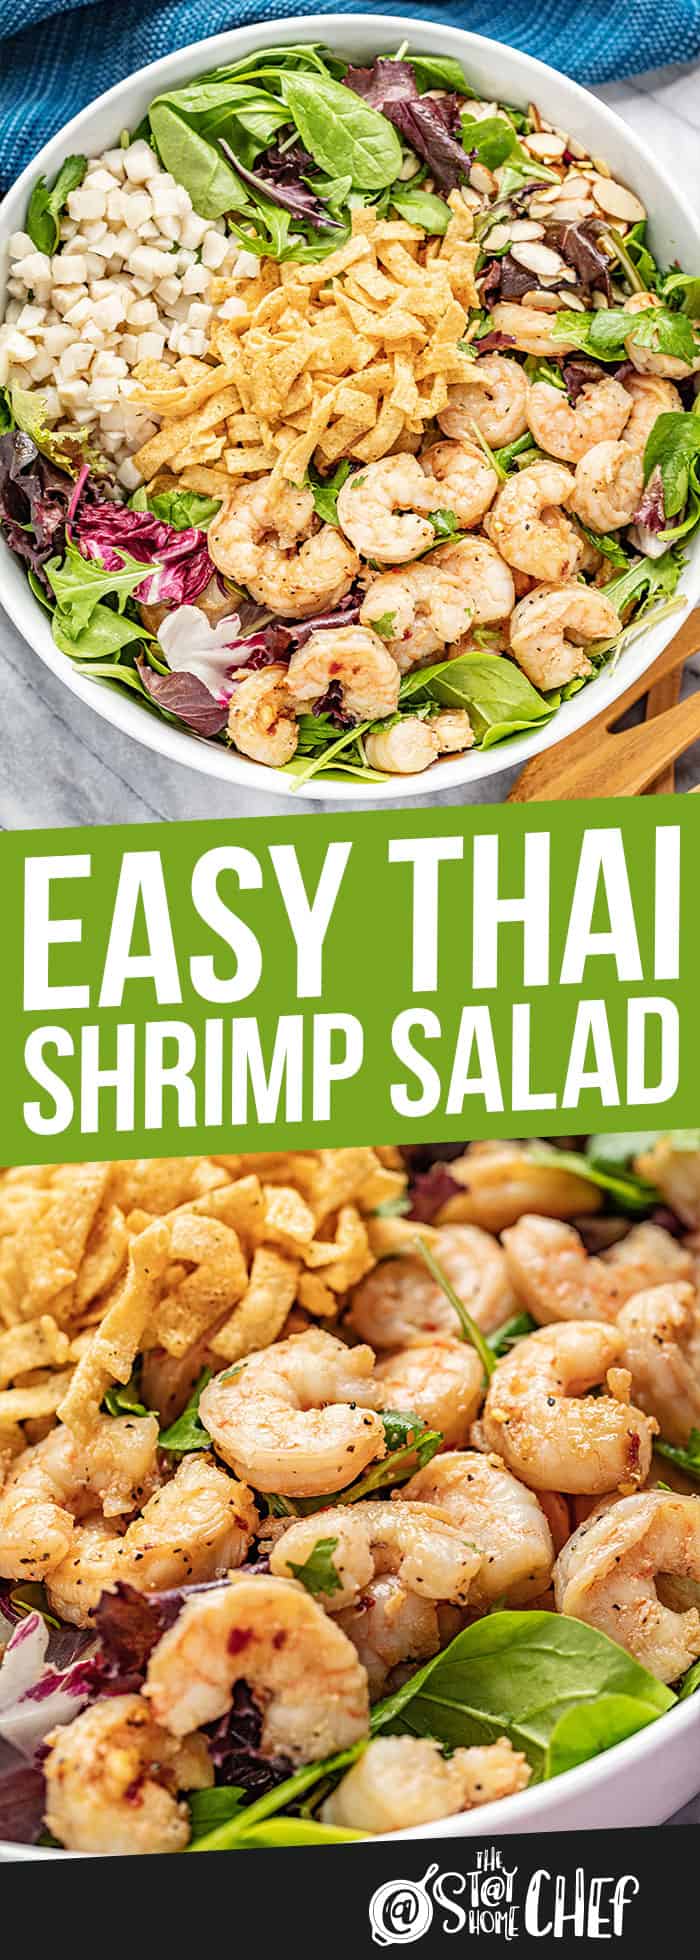 Easy Thai Shrimp Salad